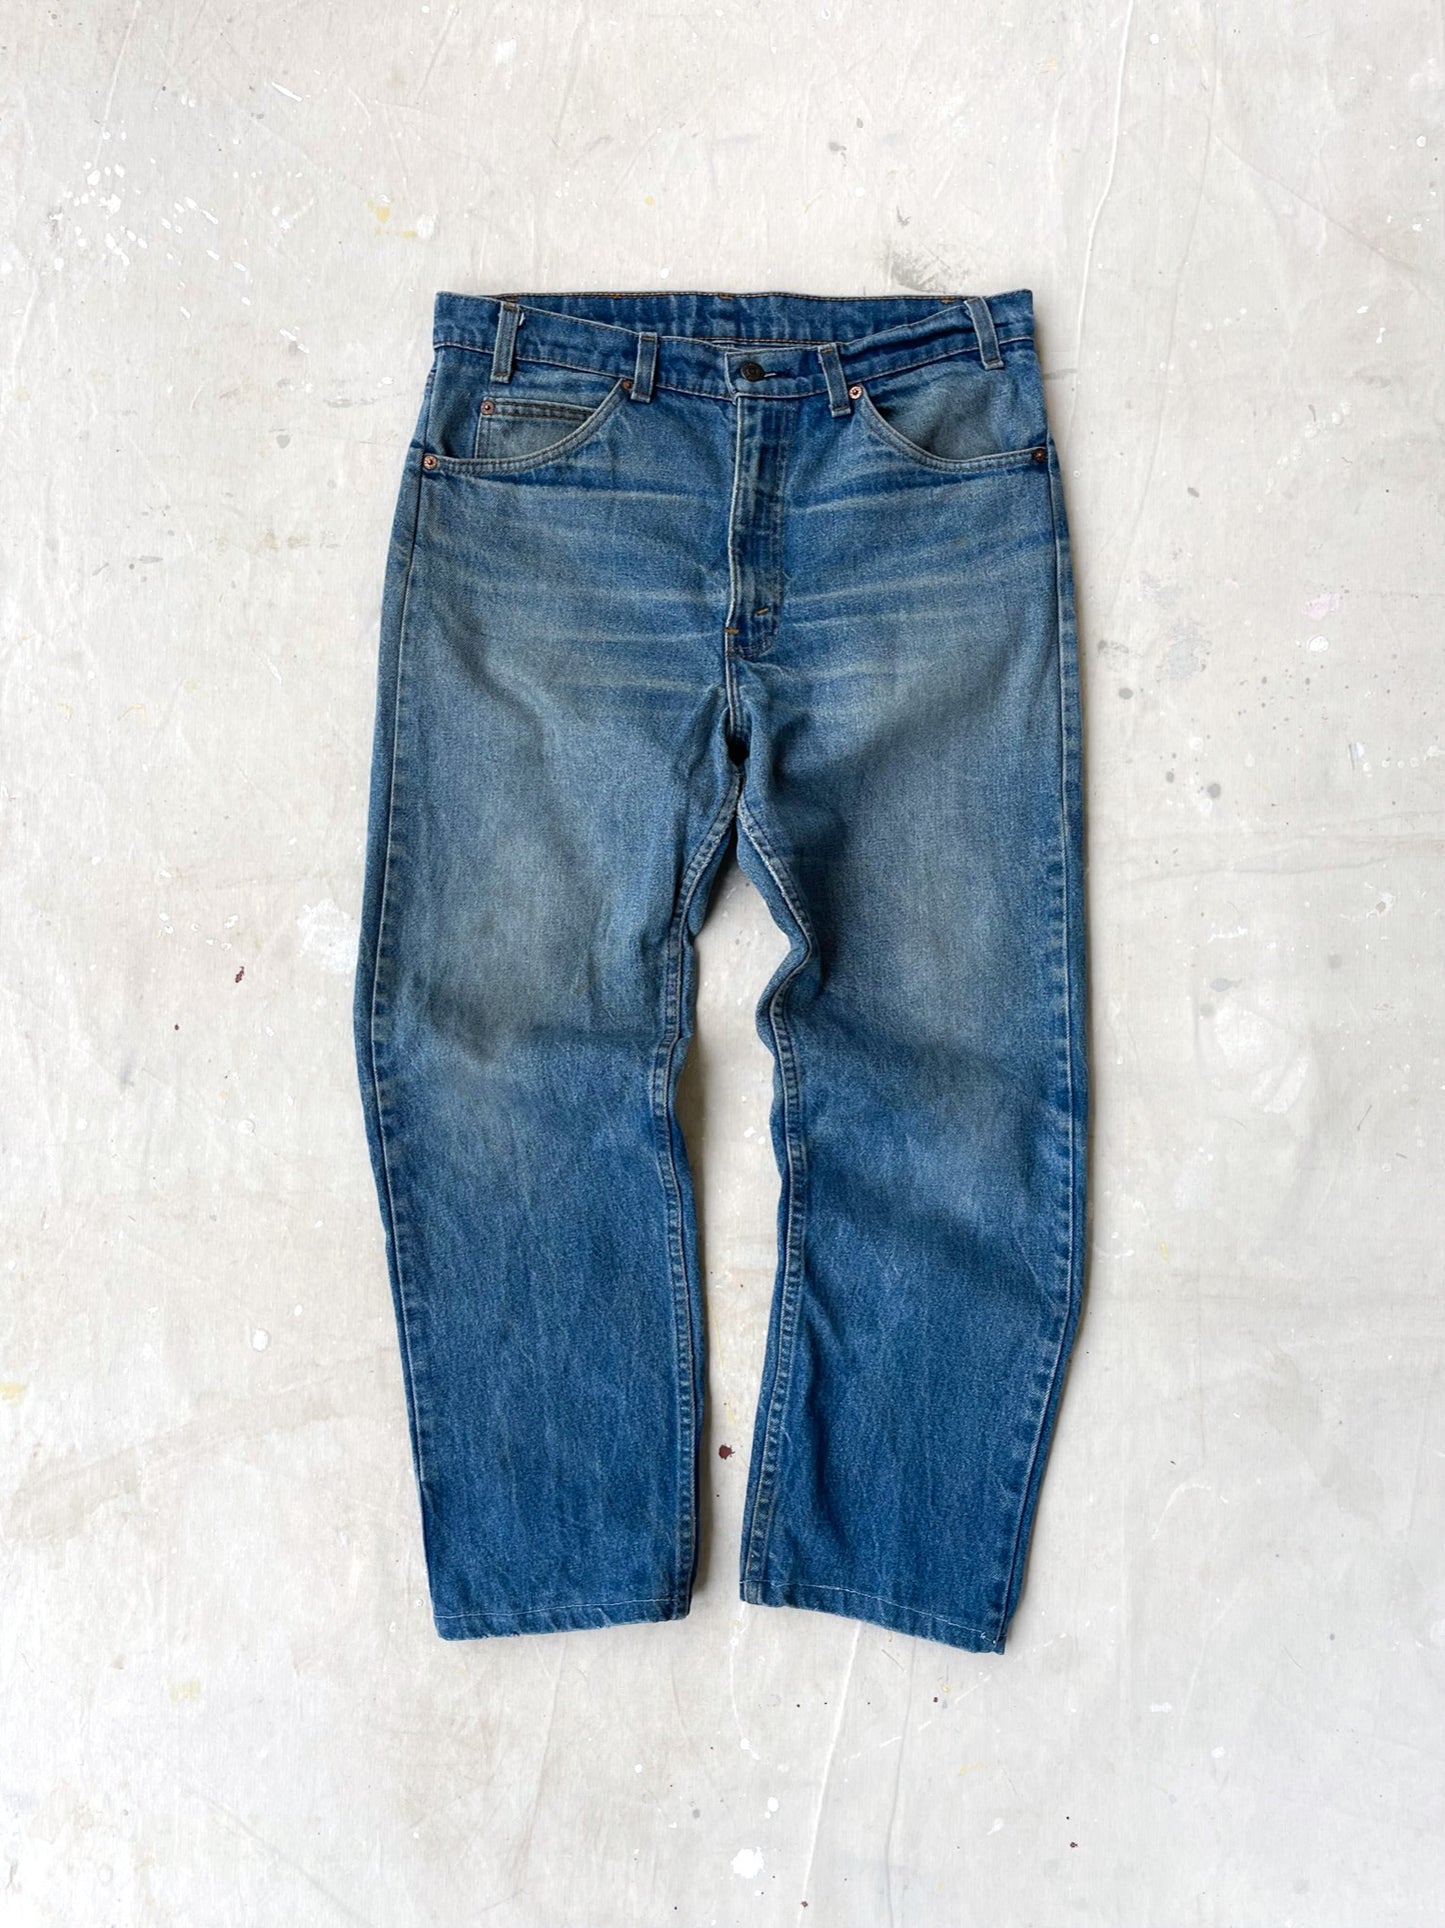 Levi's 505 Orange Tab Jeans—[34X27]